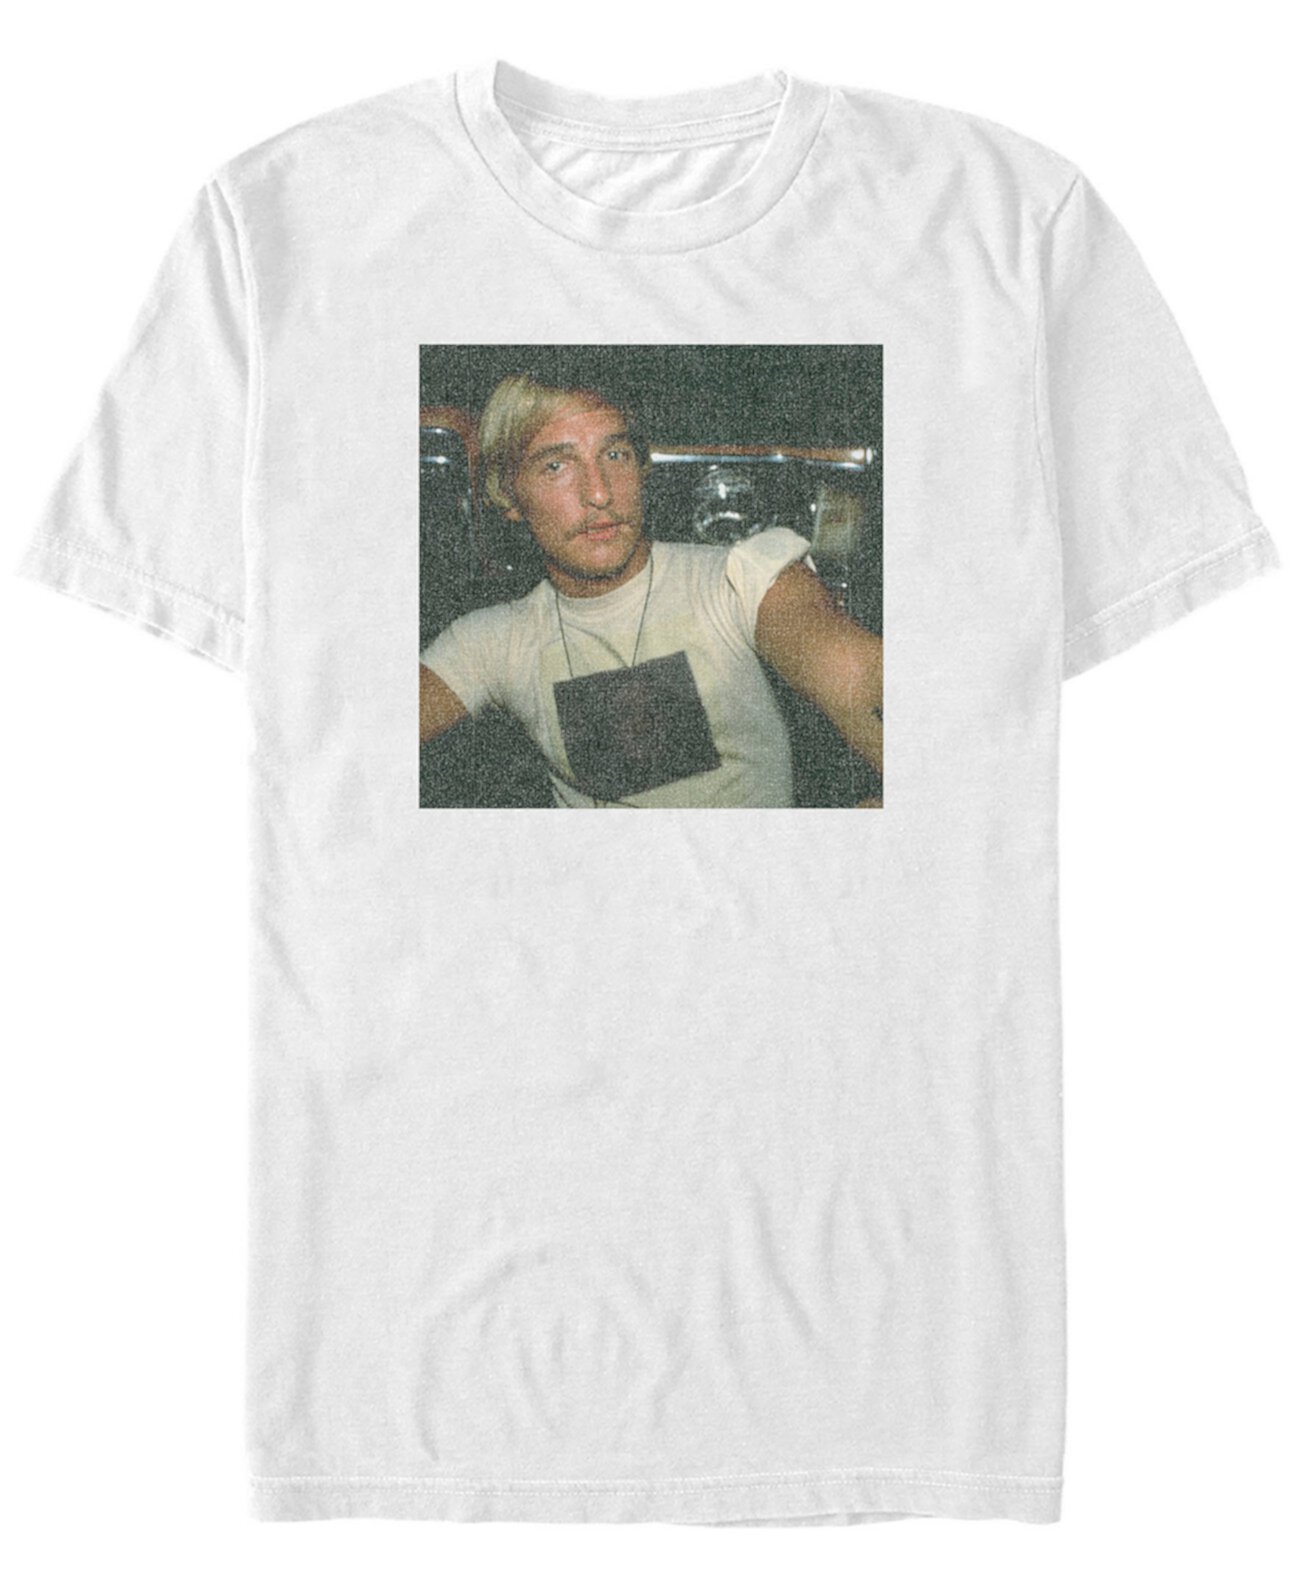 Мужская футболка с короткими рукавами и изображением Дэвида Вудерсона в стиле ретро Dazed and Confused FIFTH SUN